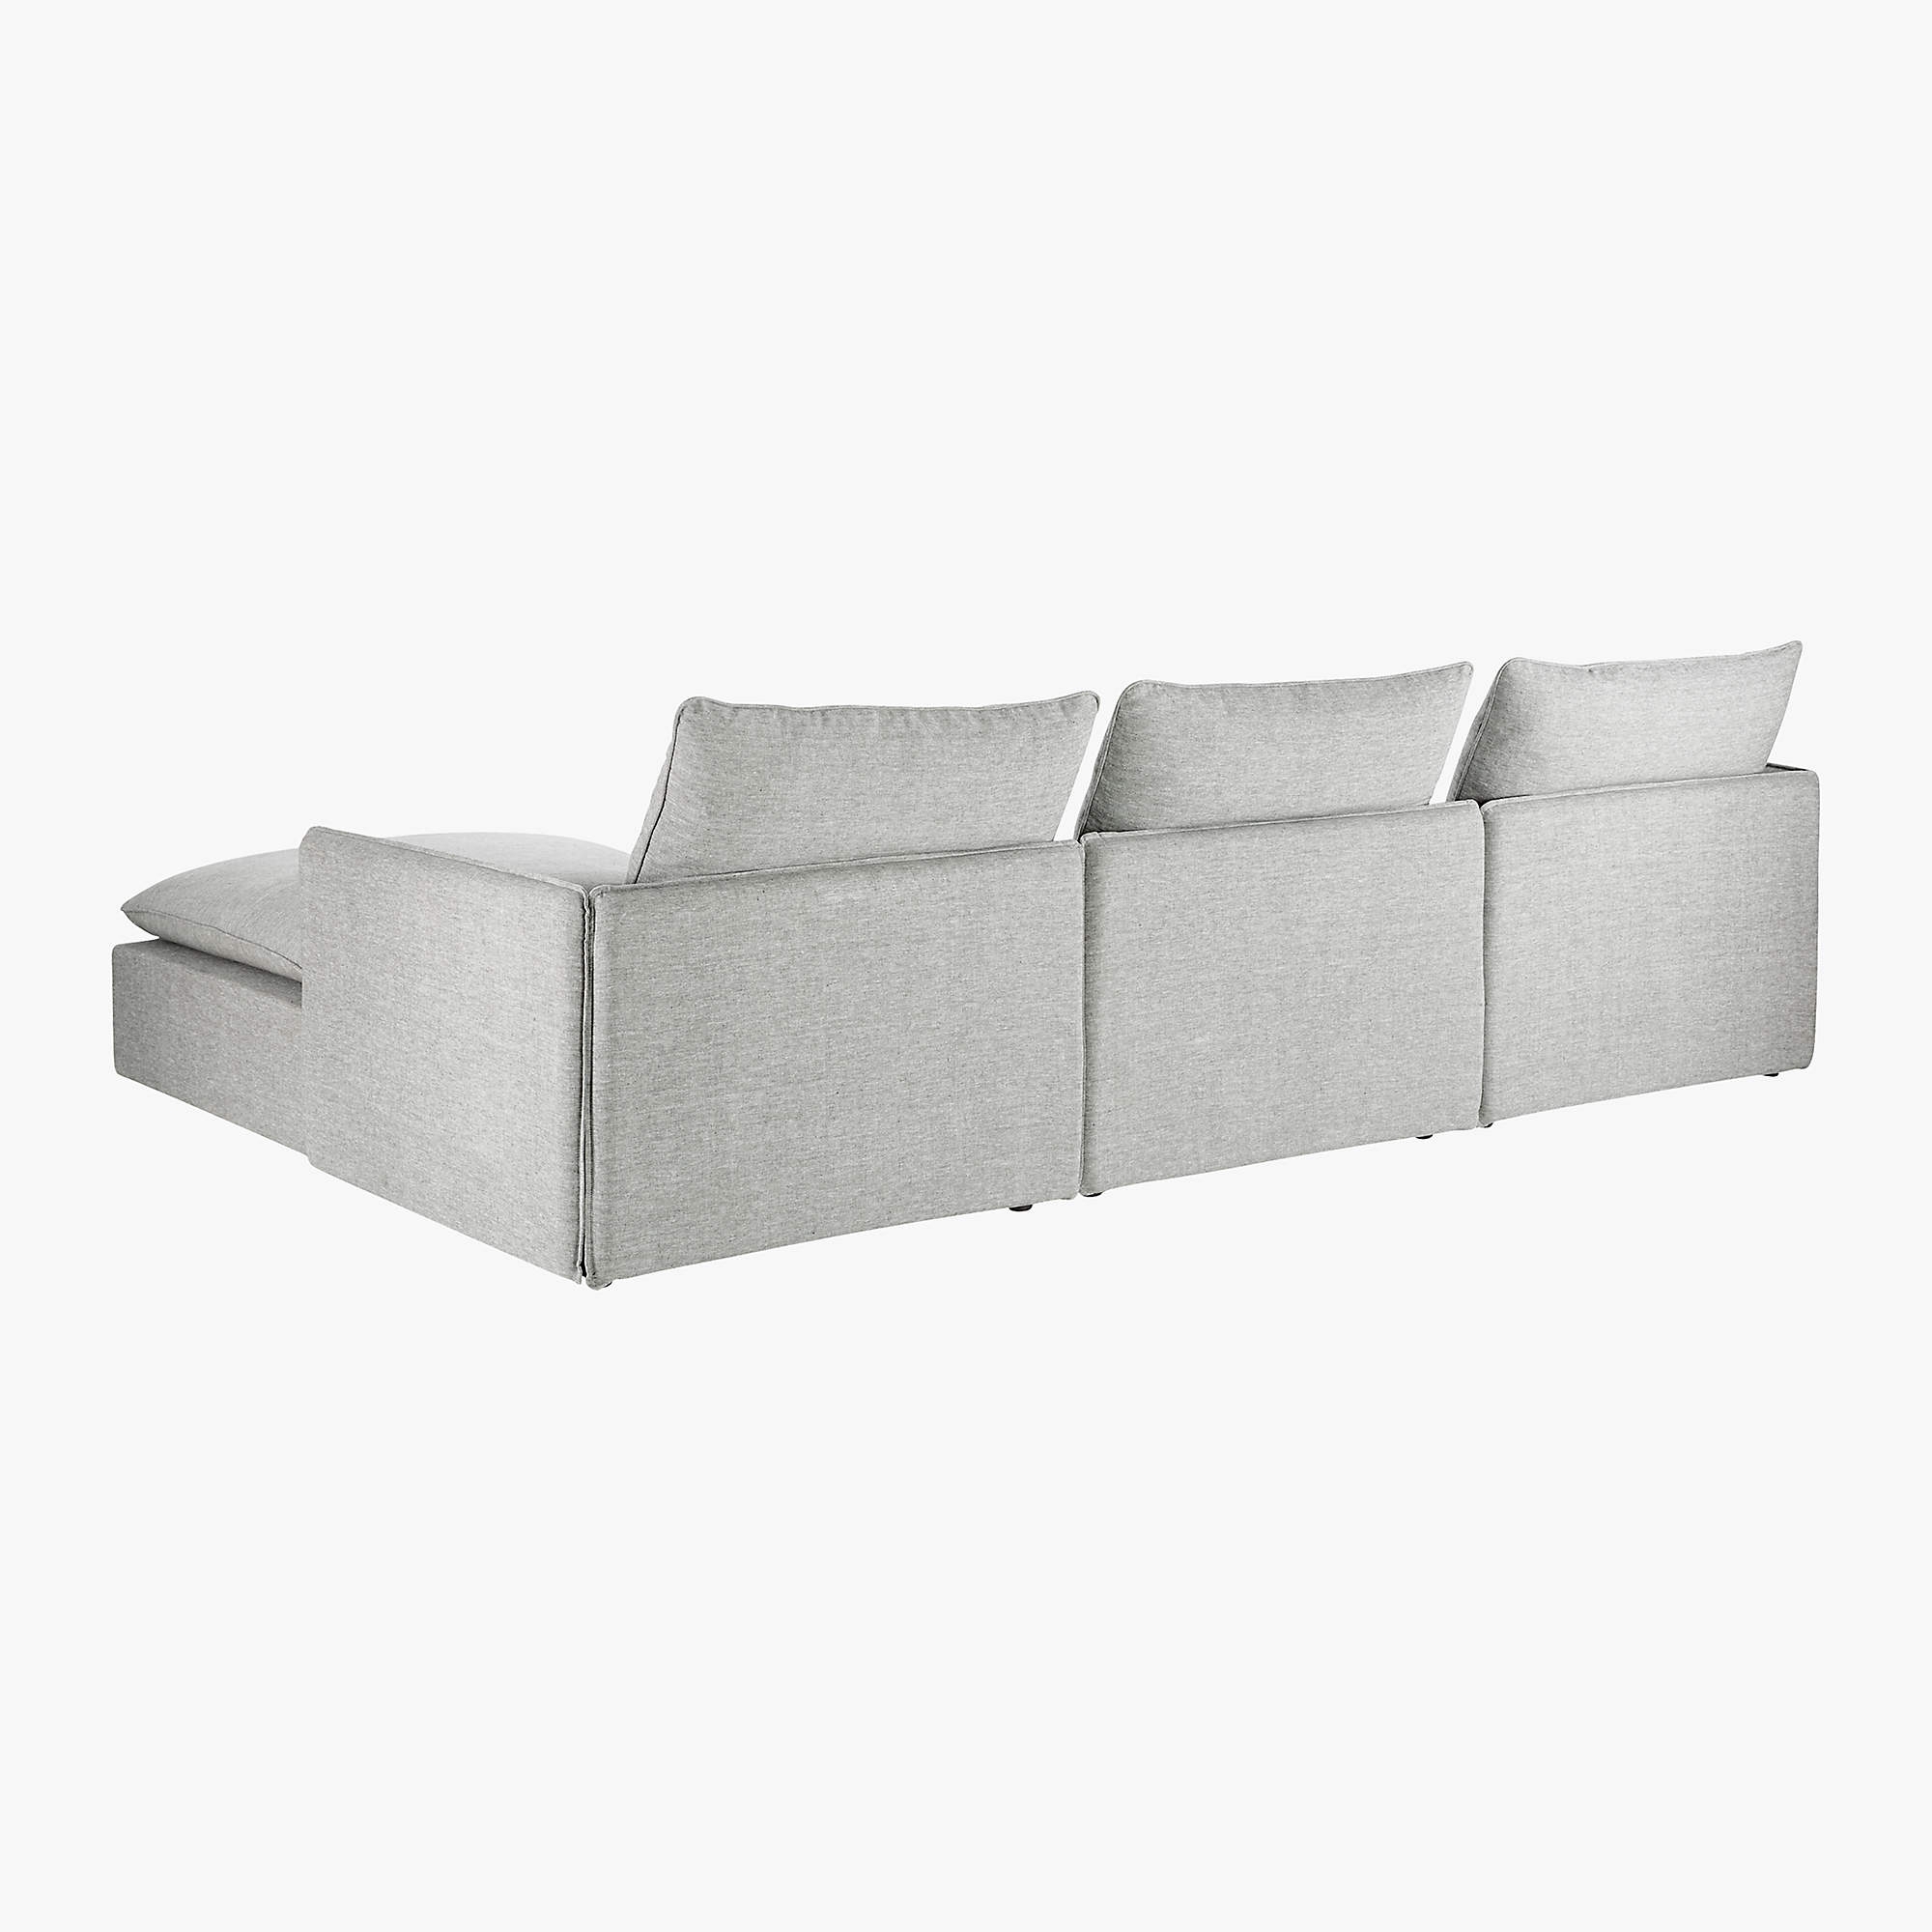 Lumin 4-Piece Sectional Sofa, Bloce Gray - Image 4